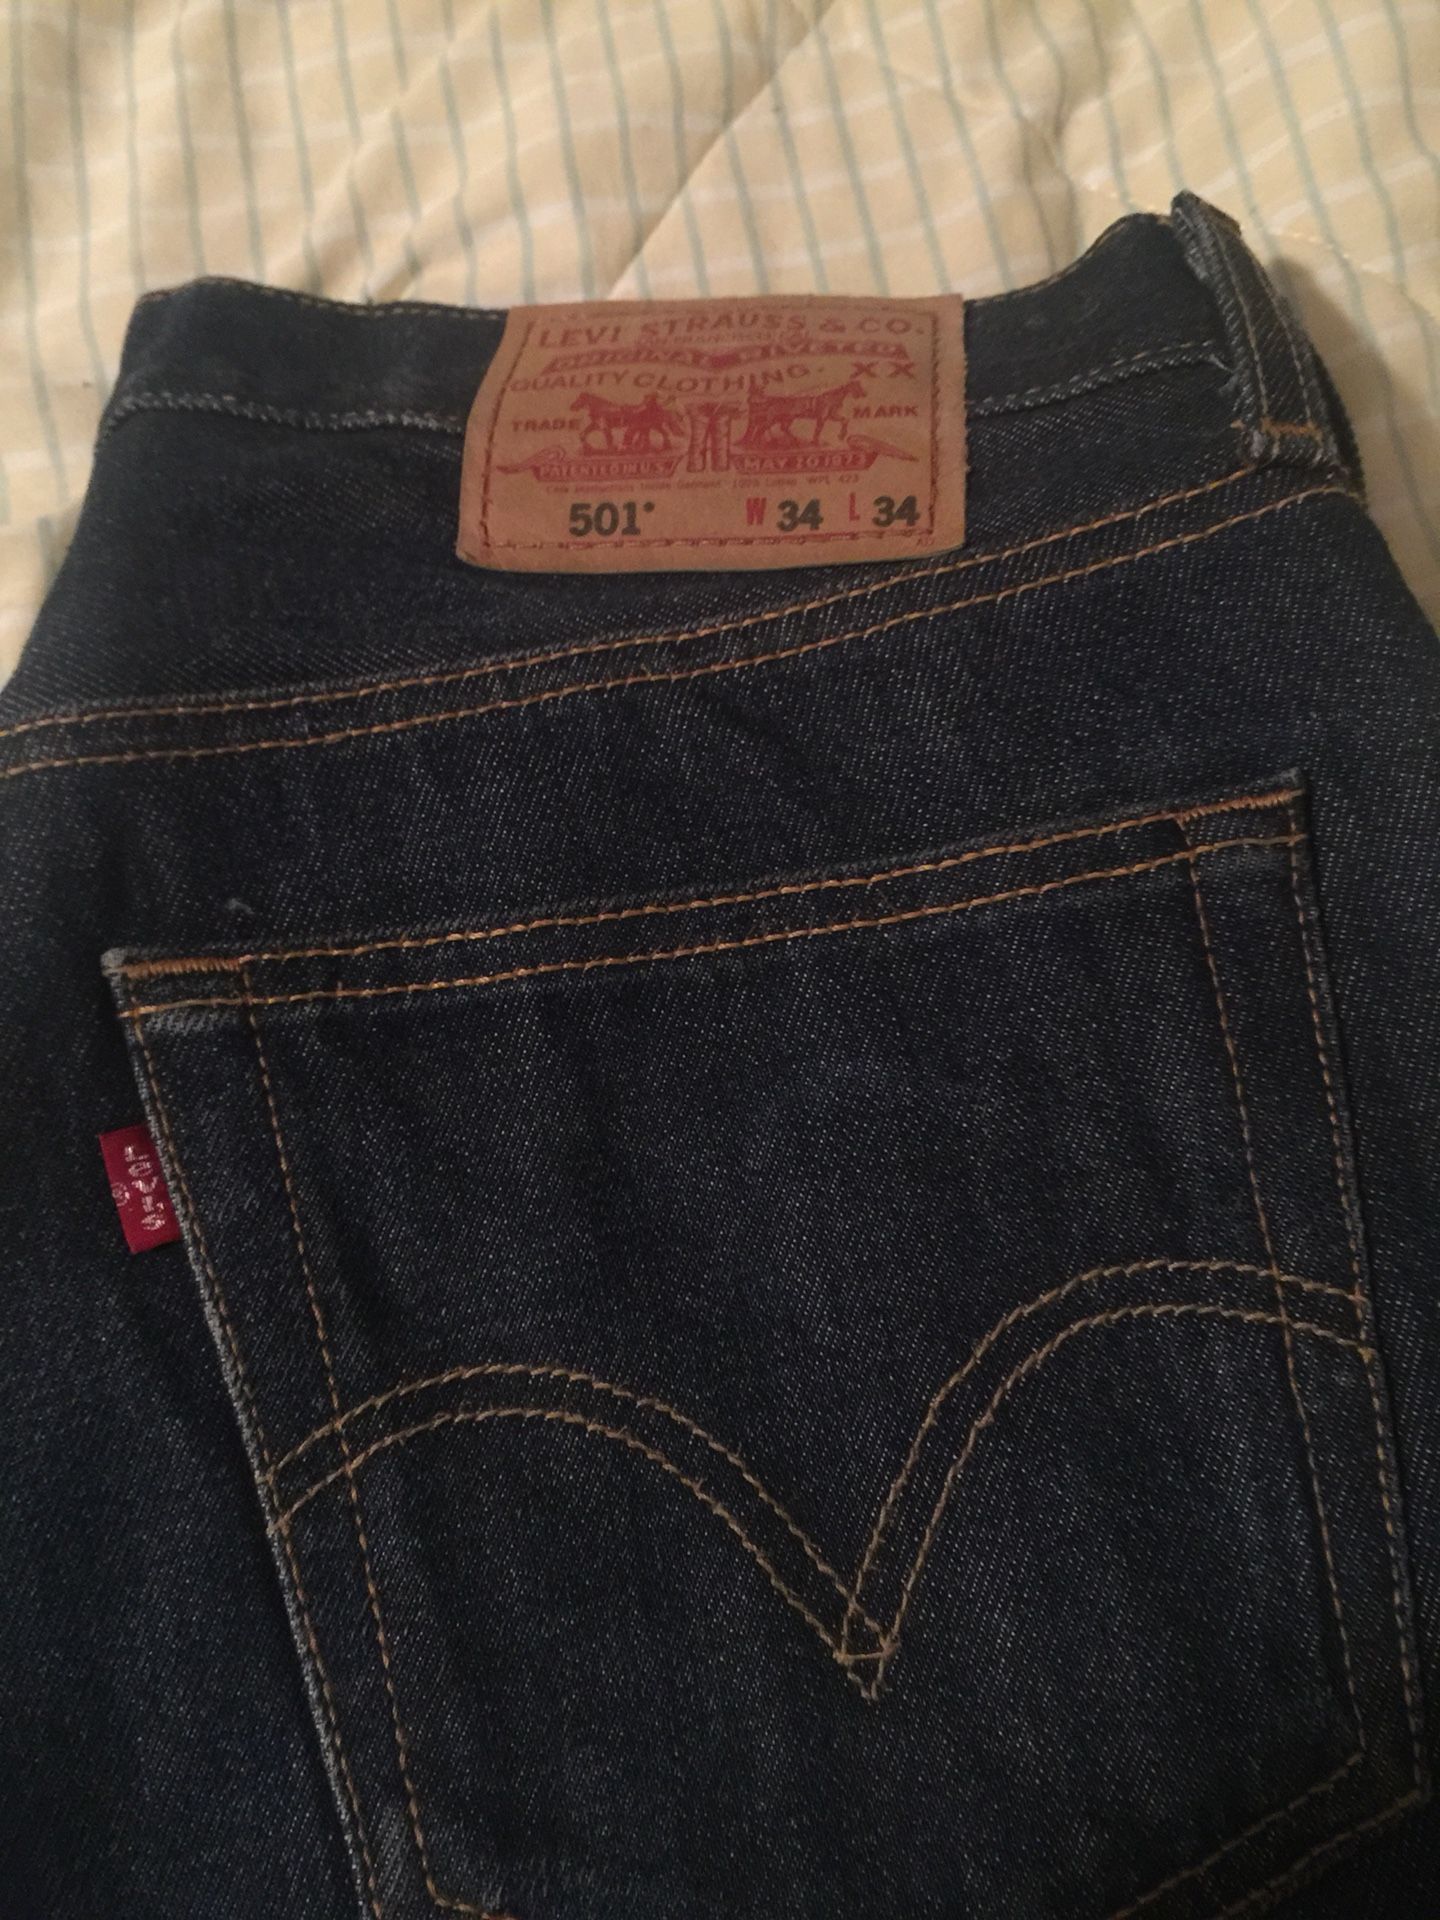 New Levi jeans size 34 x 34 straight cut